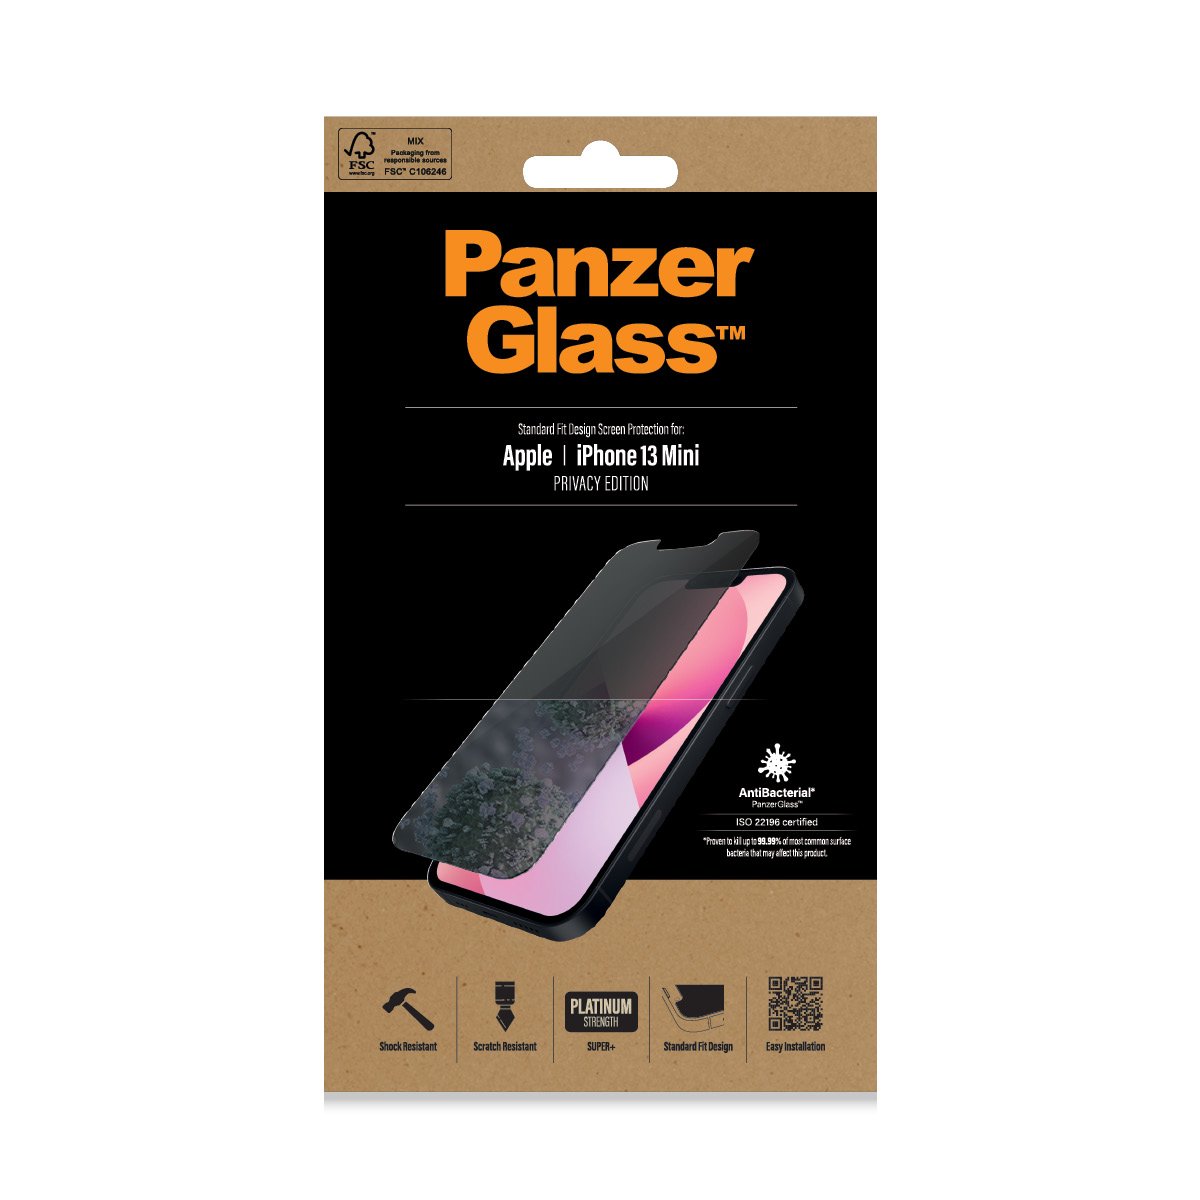 PanzerGlass iPhone 13 mini AntiBacterial Screen Protector - Privacy